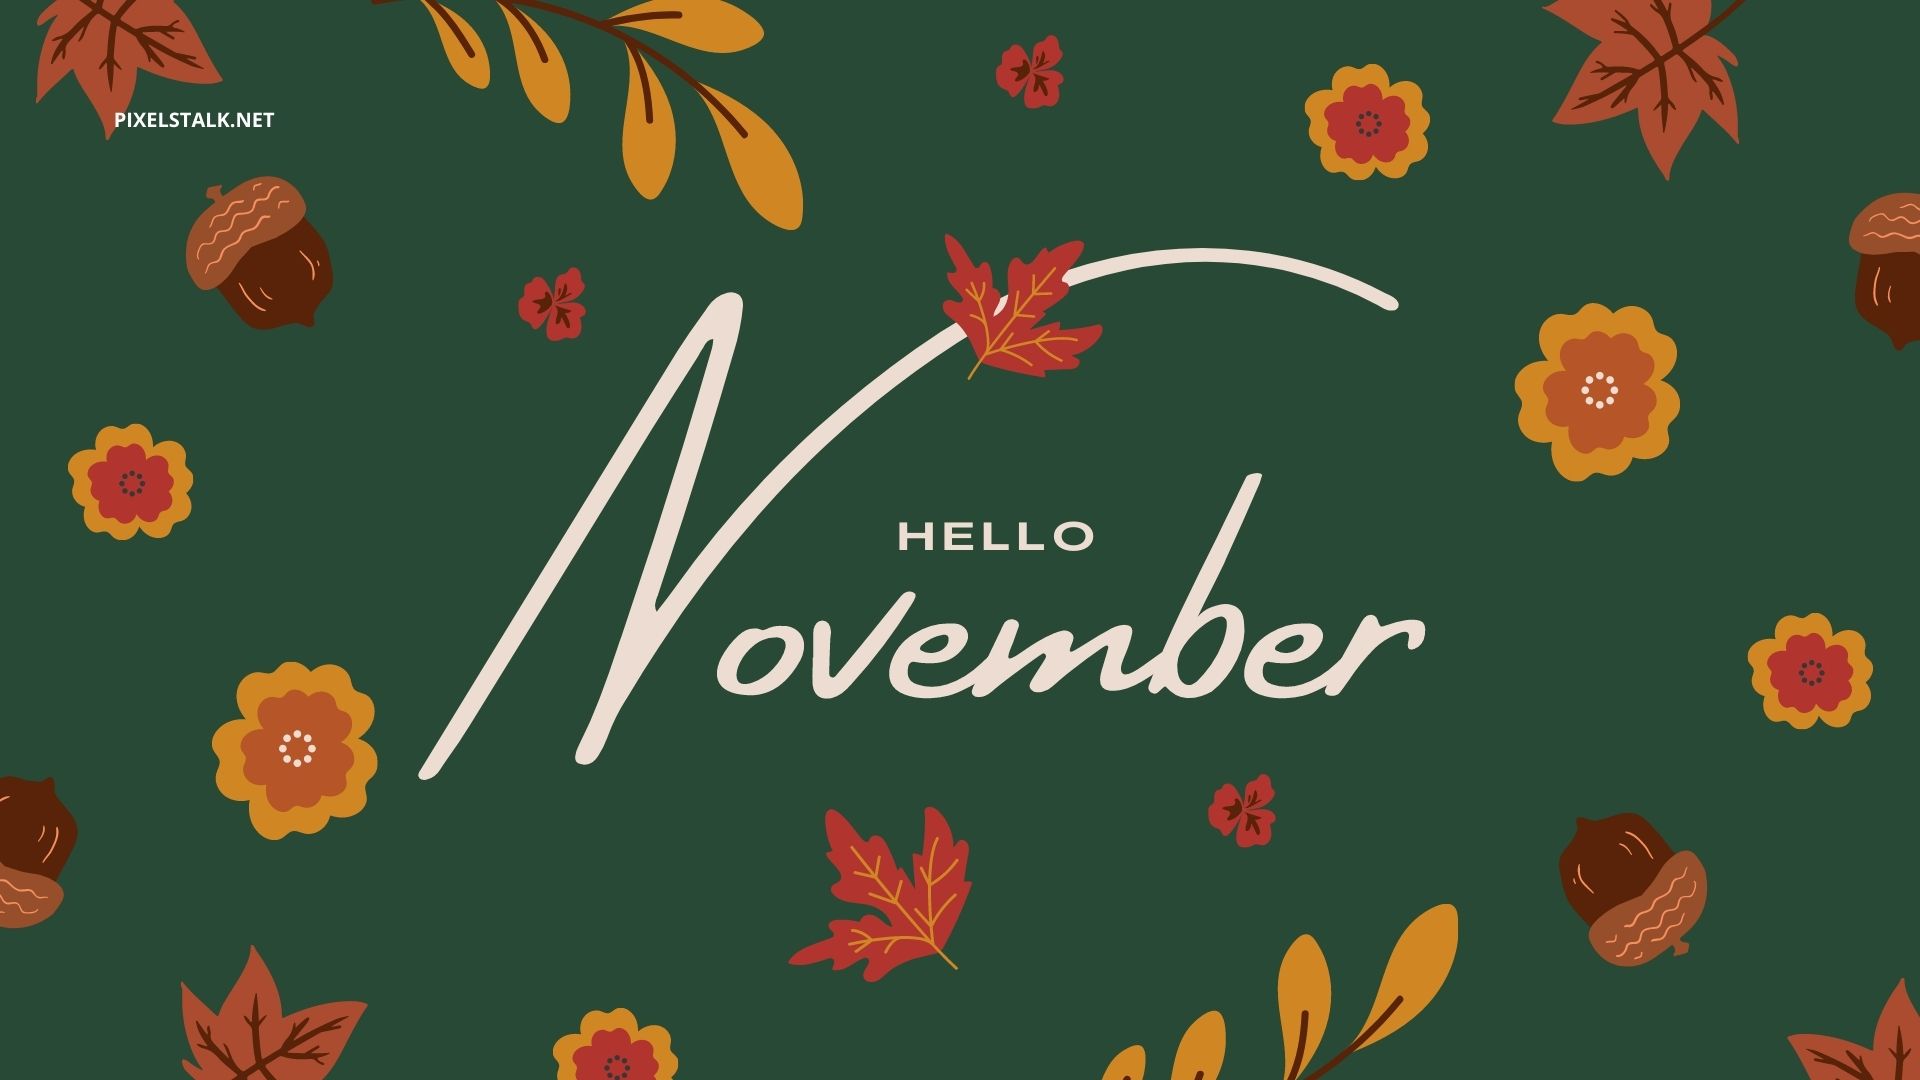 Hello November HD Wallpapers - PixelsTalk.Net